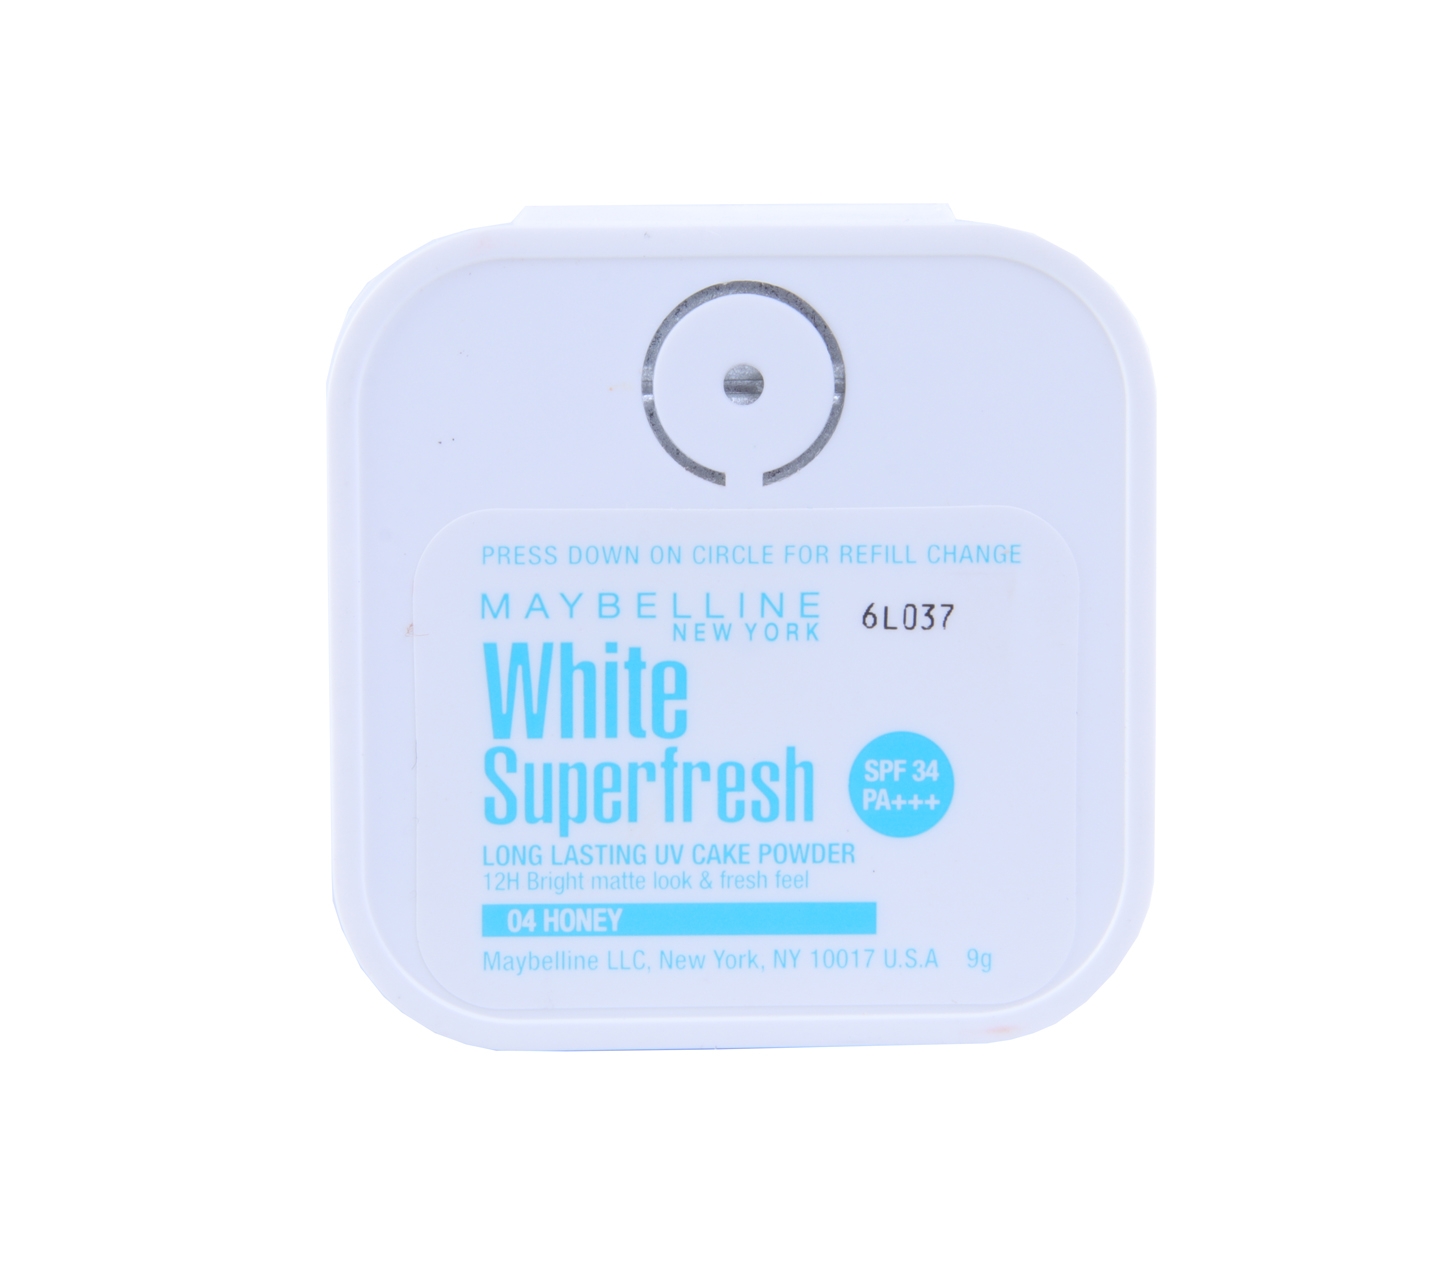 Maybelline White Superfresh Long Lasting Uv Cake Powder 04 Honey (Refill) Faces